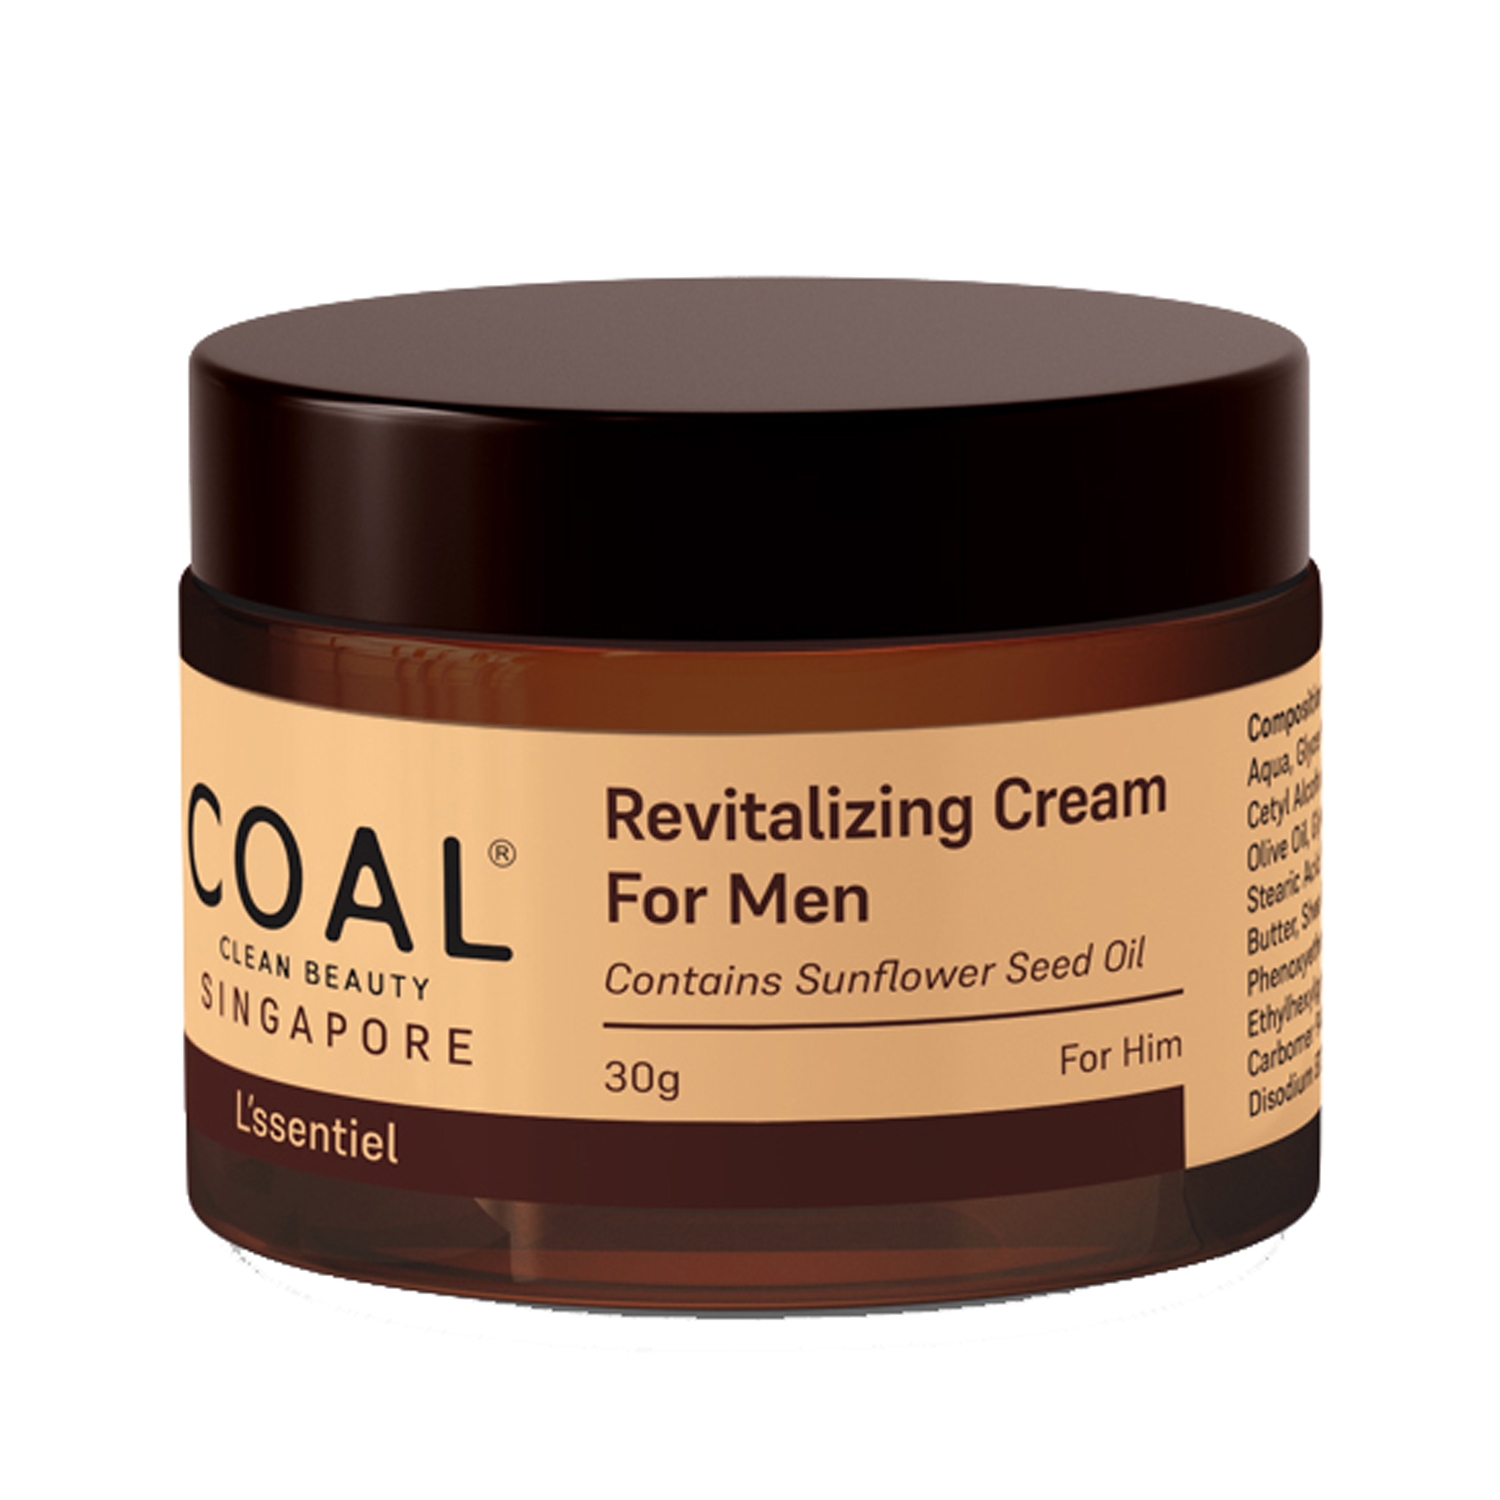 COAL CLEAN BEAUTY | Coal Clean Beauty Revitalizing Cream For Men (30g)